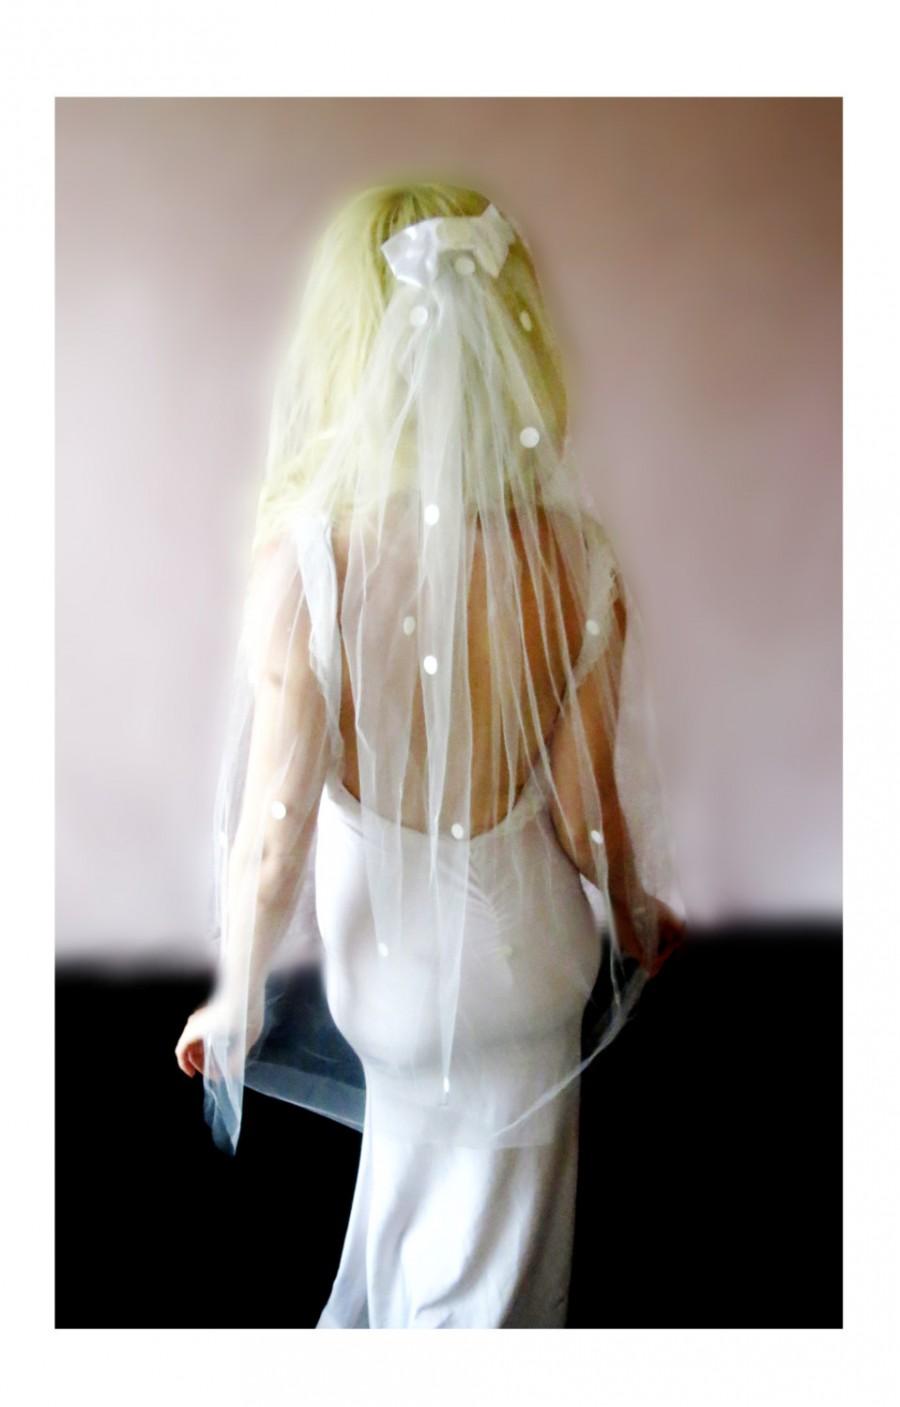 Mariage - New 2017 Collection Polka dot bow veil 1960's mod vintage inspired retro hepburn wedding bridal